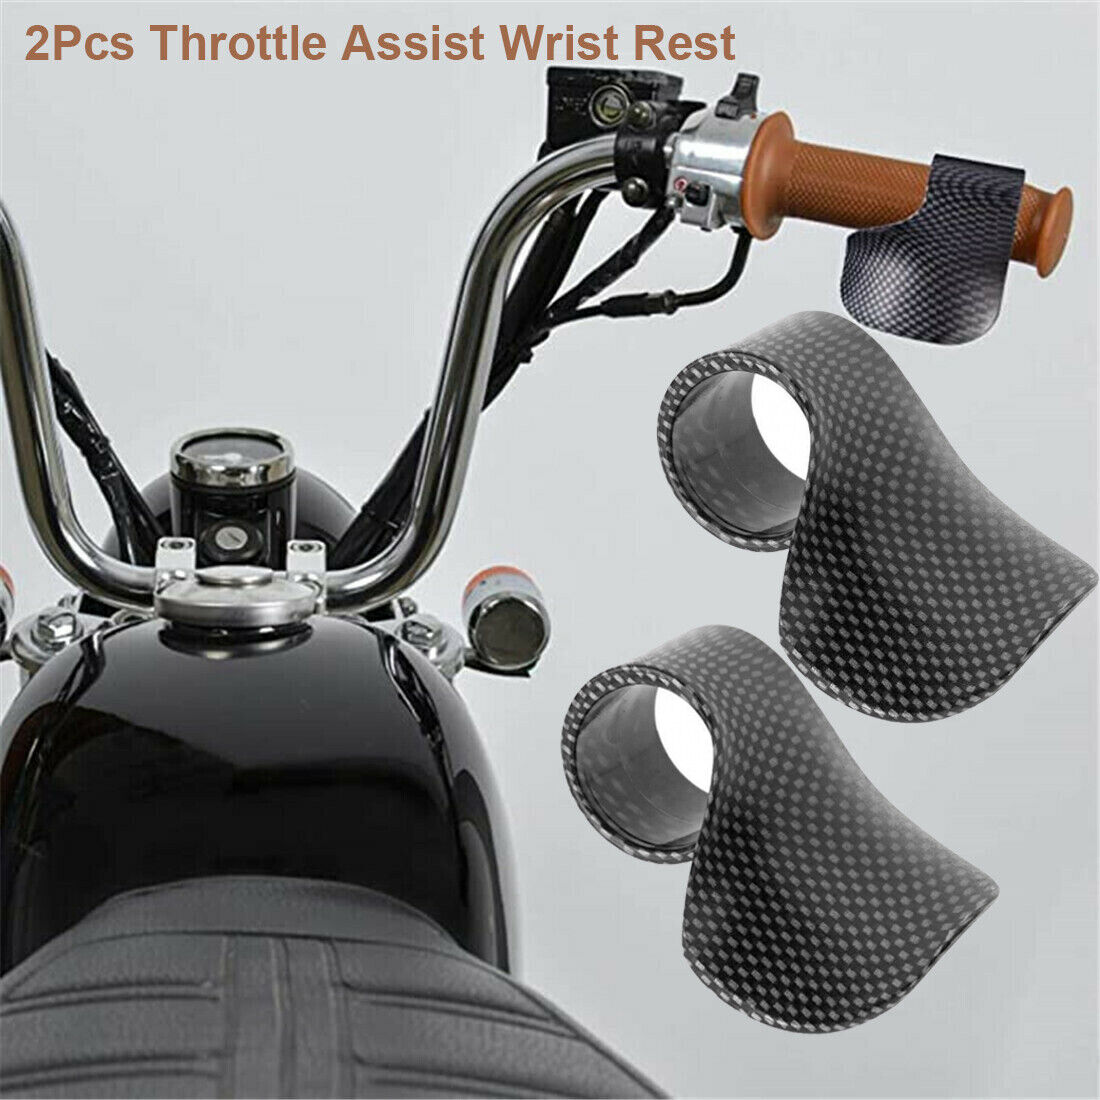 2Pcs Universal Motorcycle Cruise Control Throttle Assist Wrist Rest Aid Grip